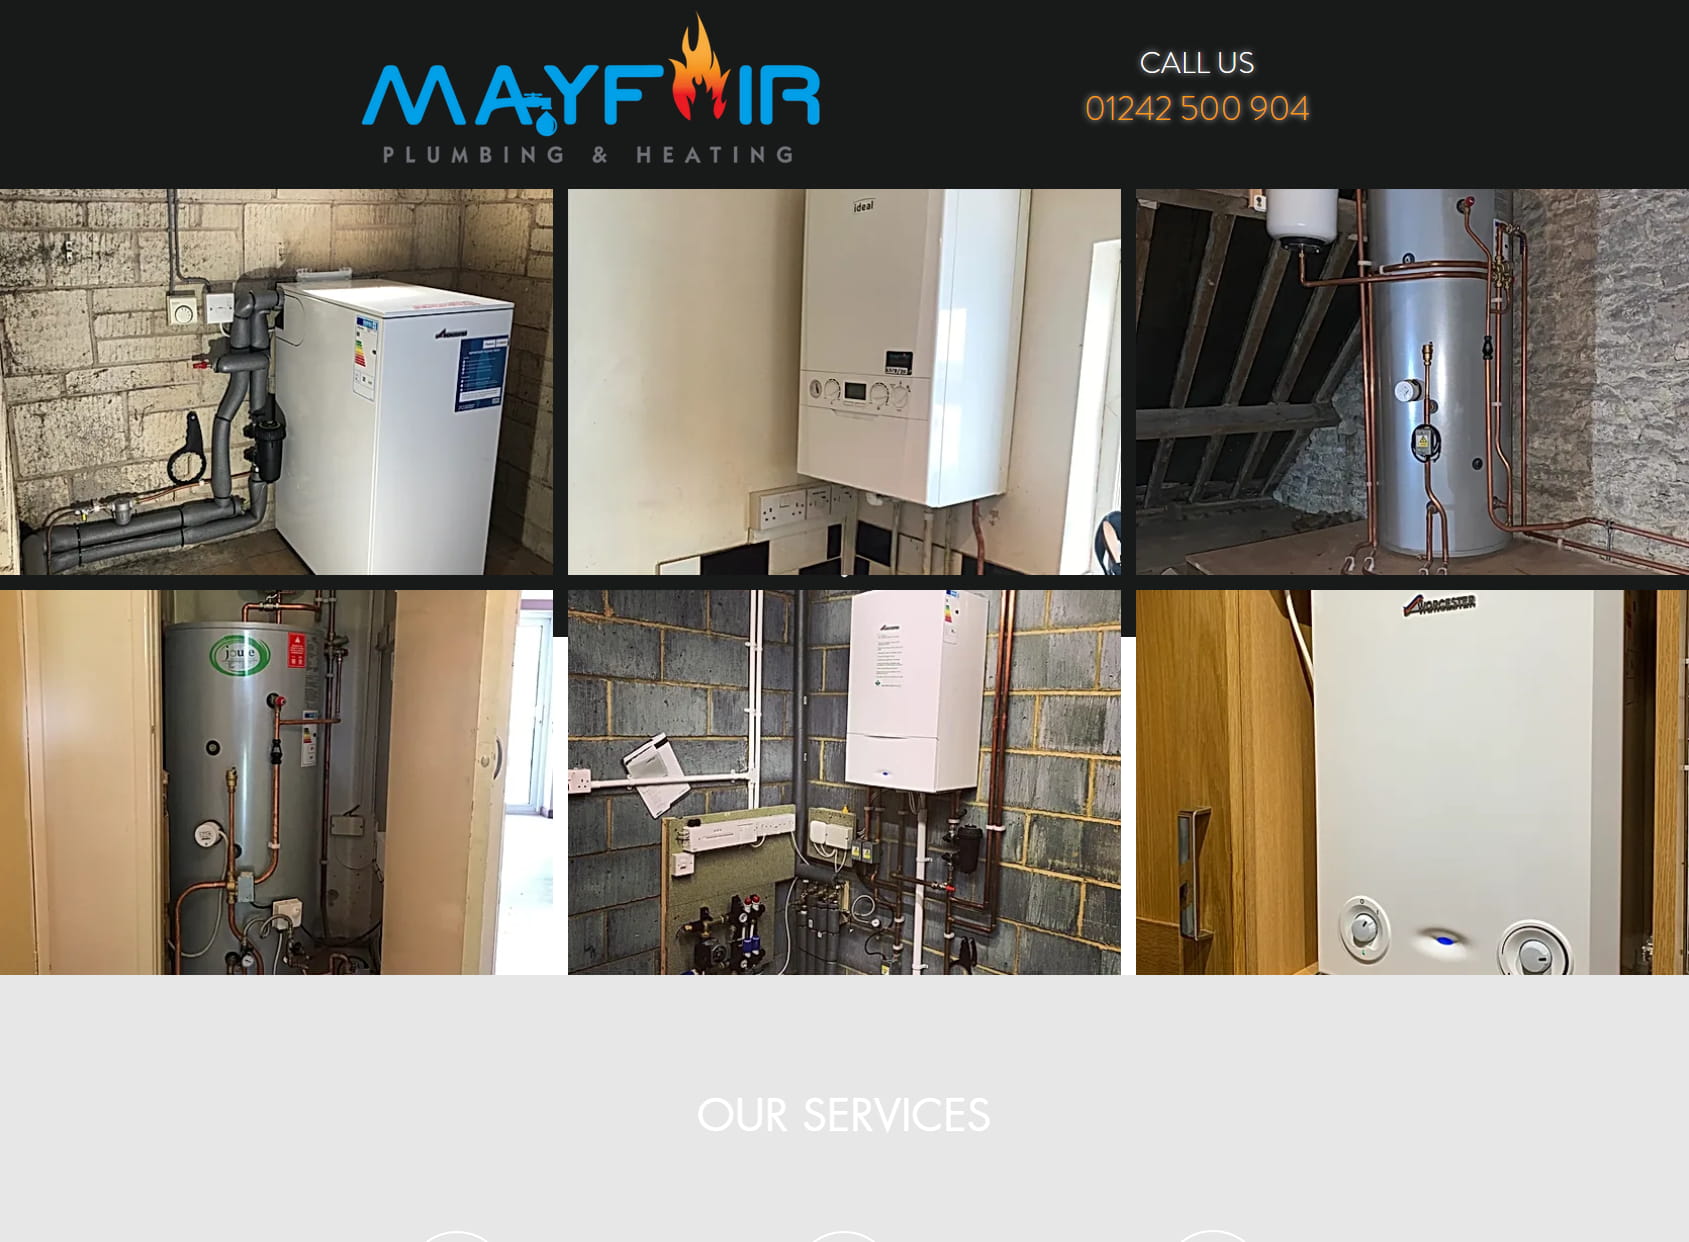 Mayfair Plumbing & Heating Ltd